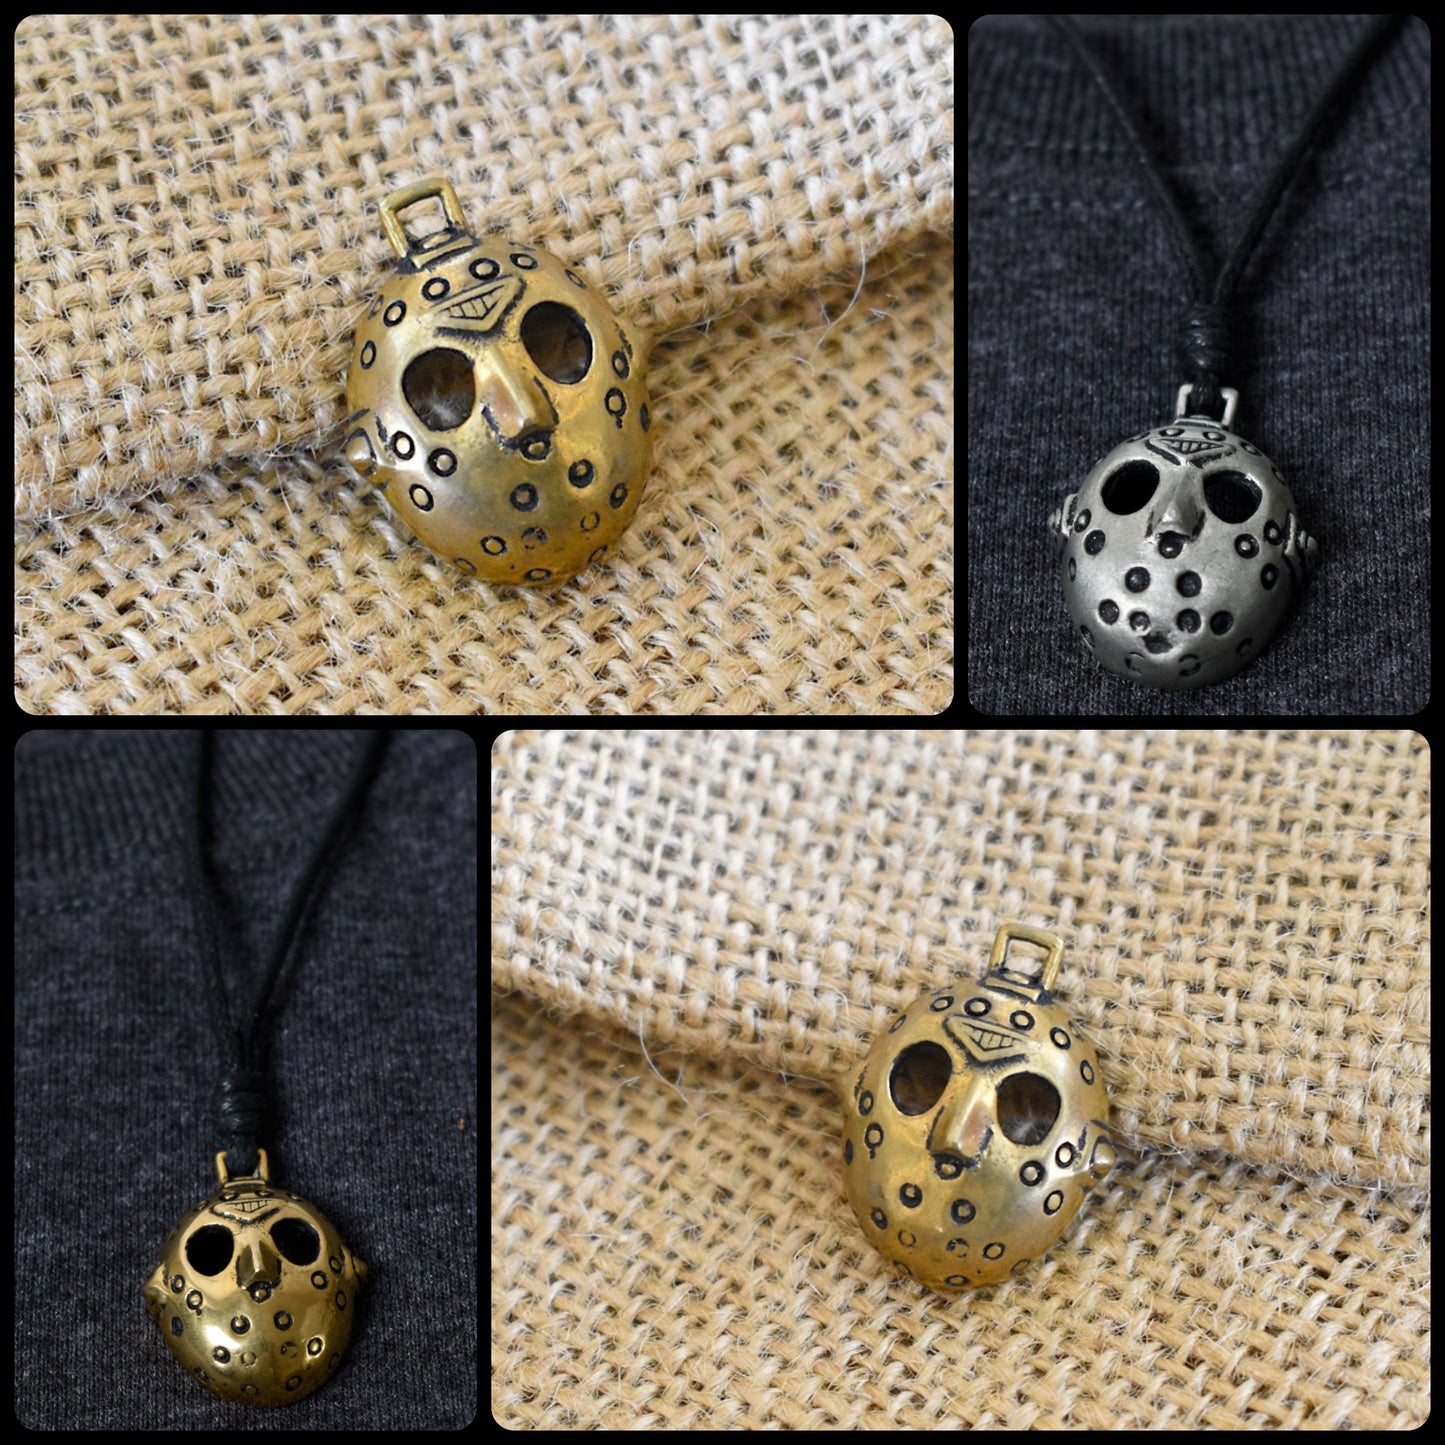 New Jason Hockey Mask Silver Pewter Gold Brass Charm Necklace Pendant Jewelry